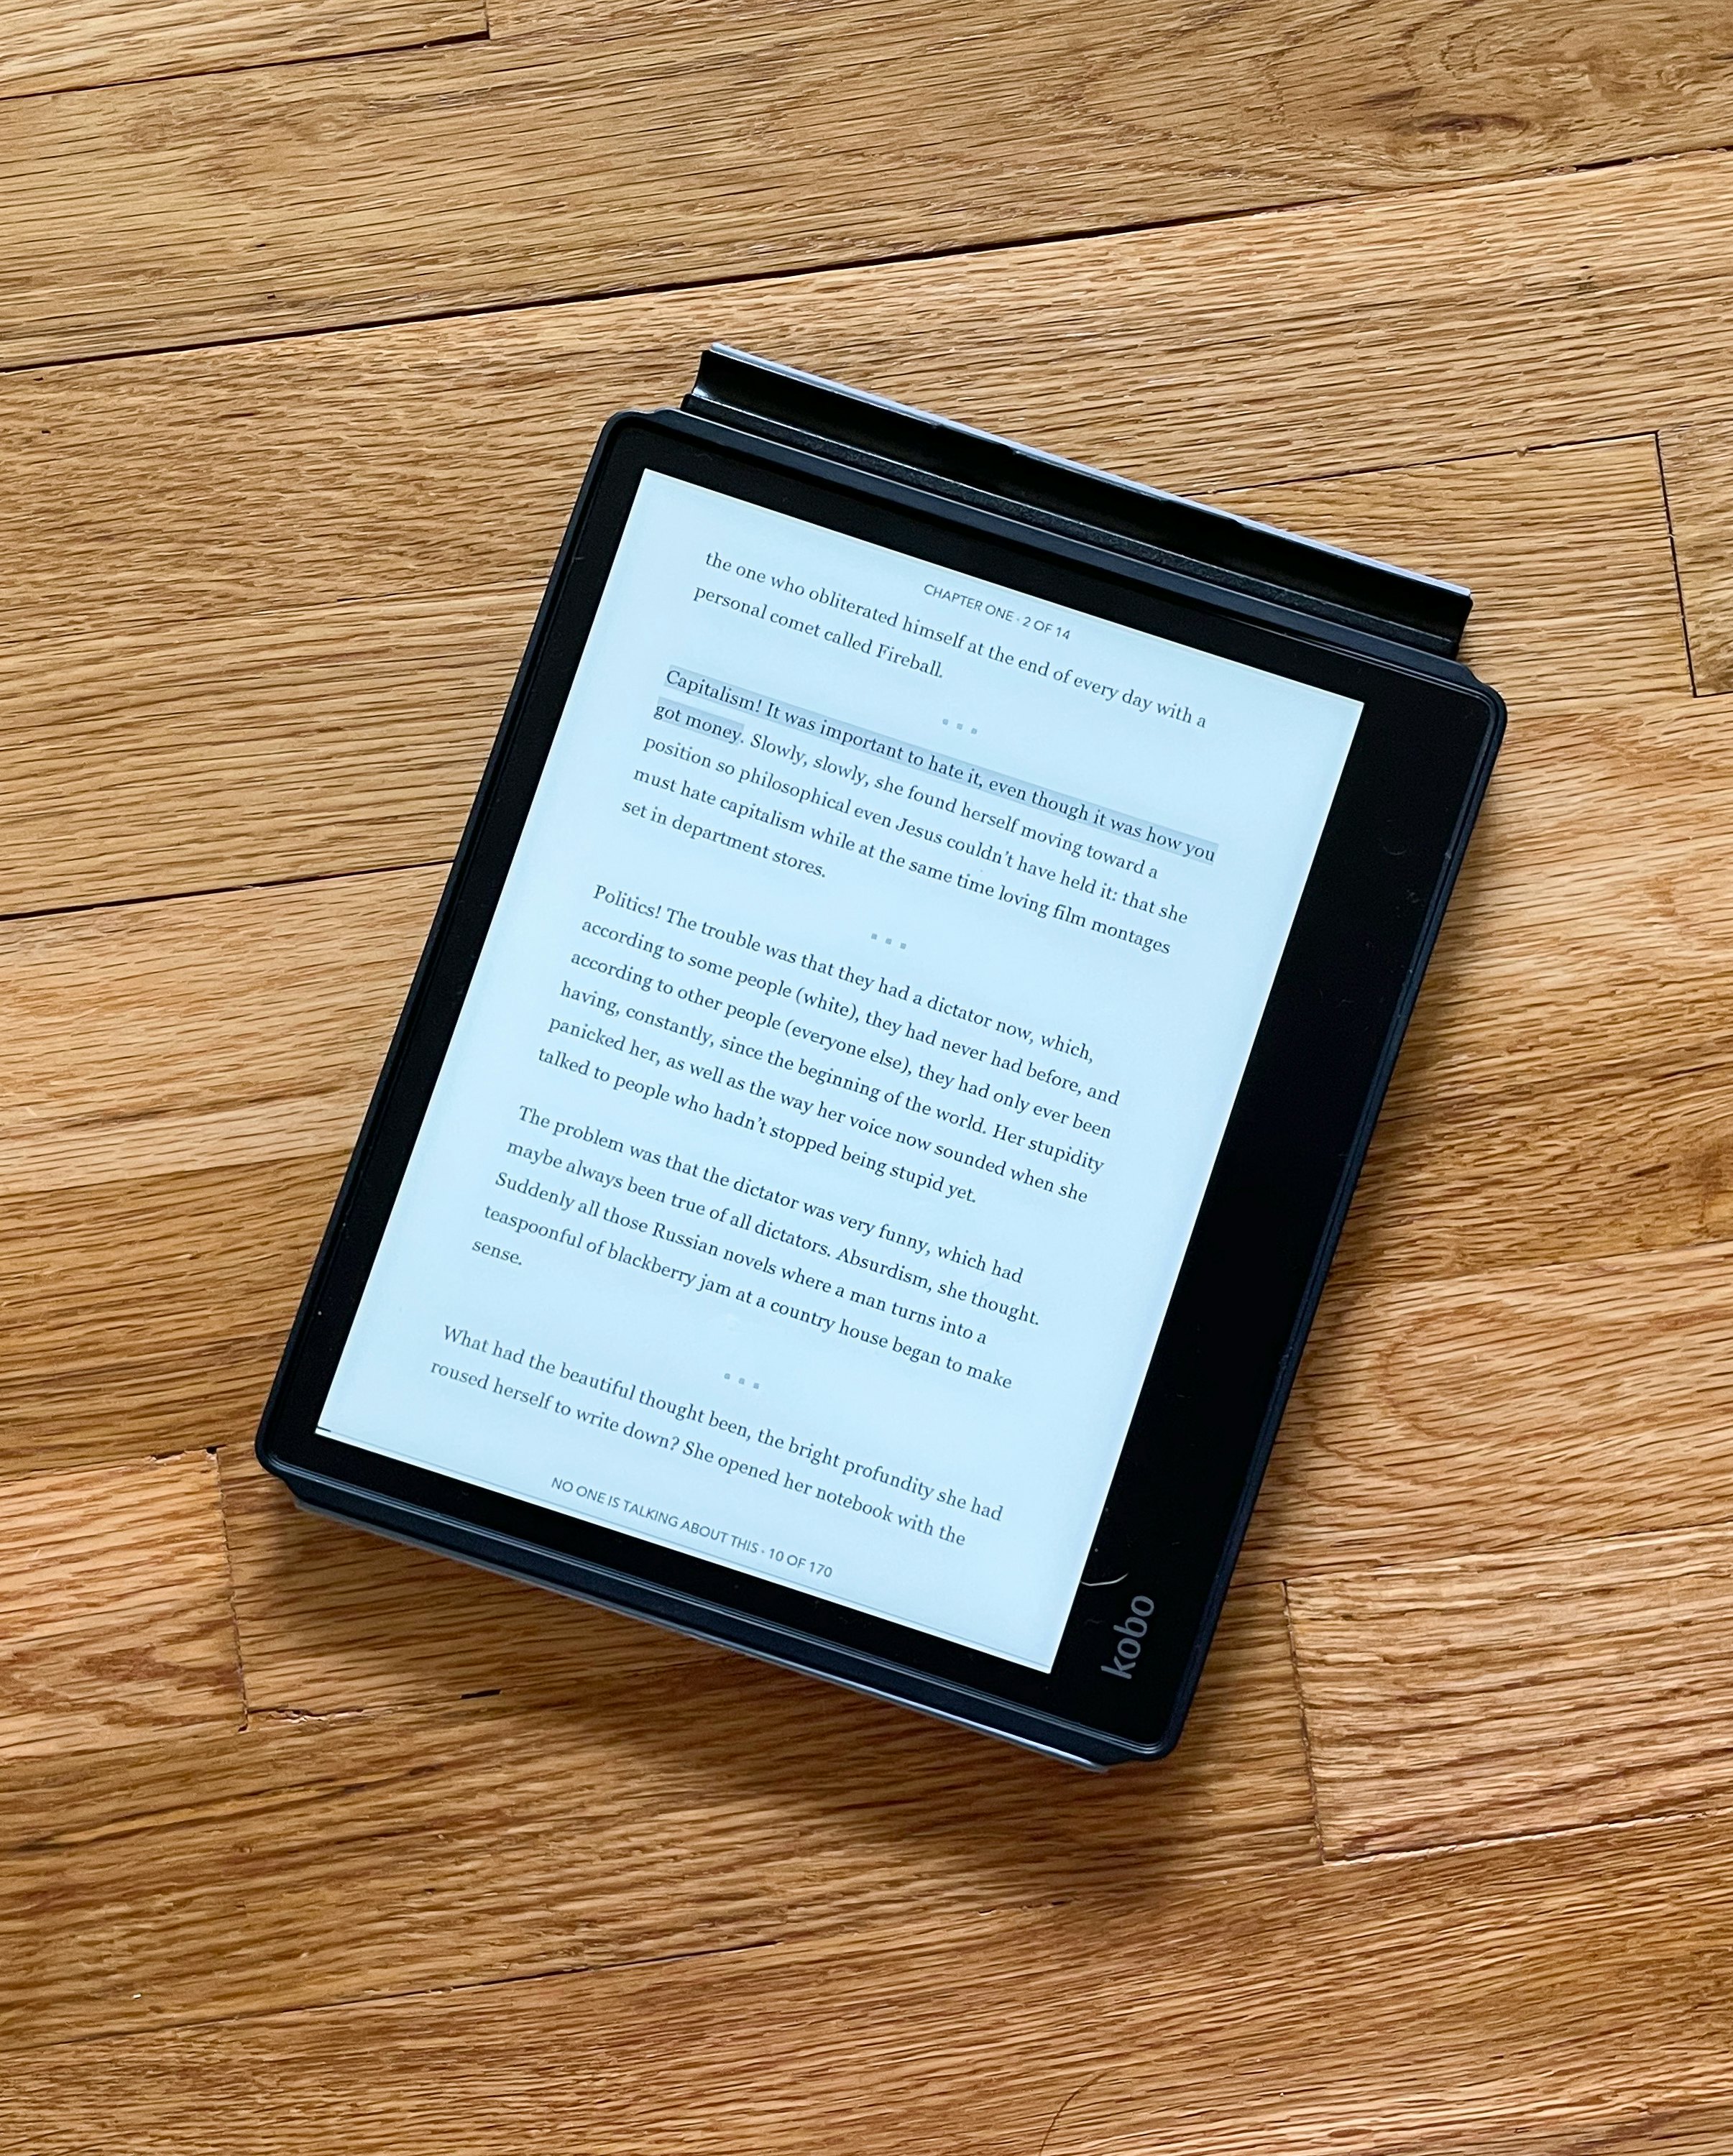 Review: Kobo elevates ebook reader range with expensive Elipsa